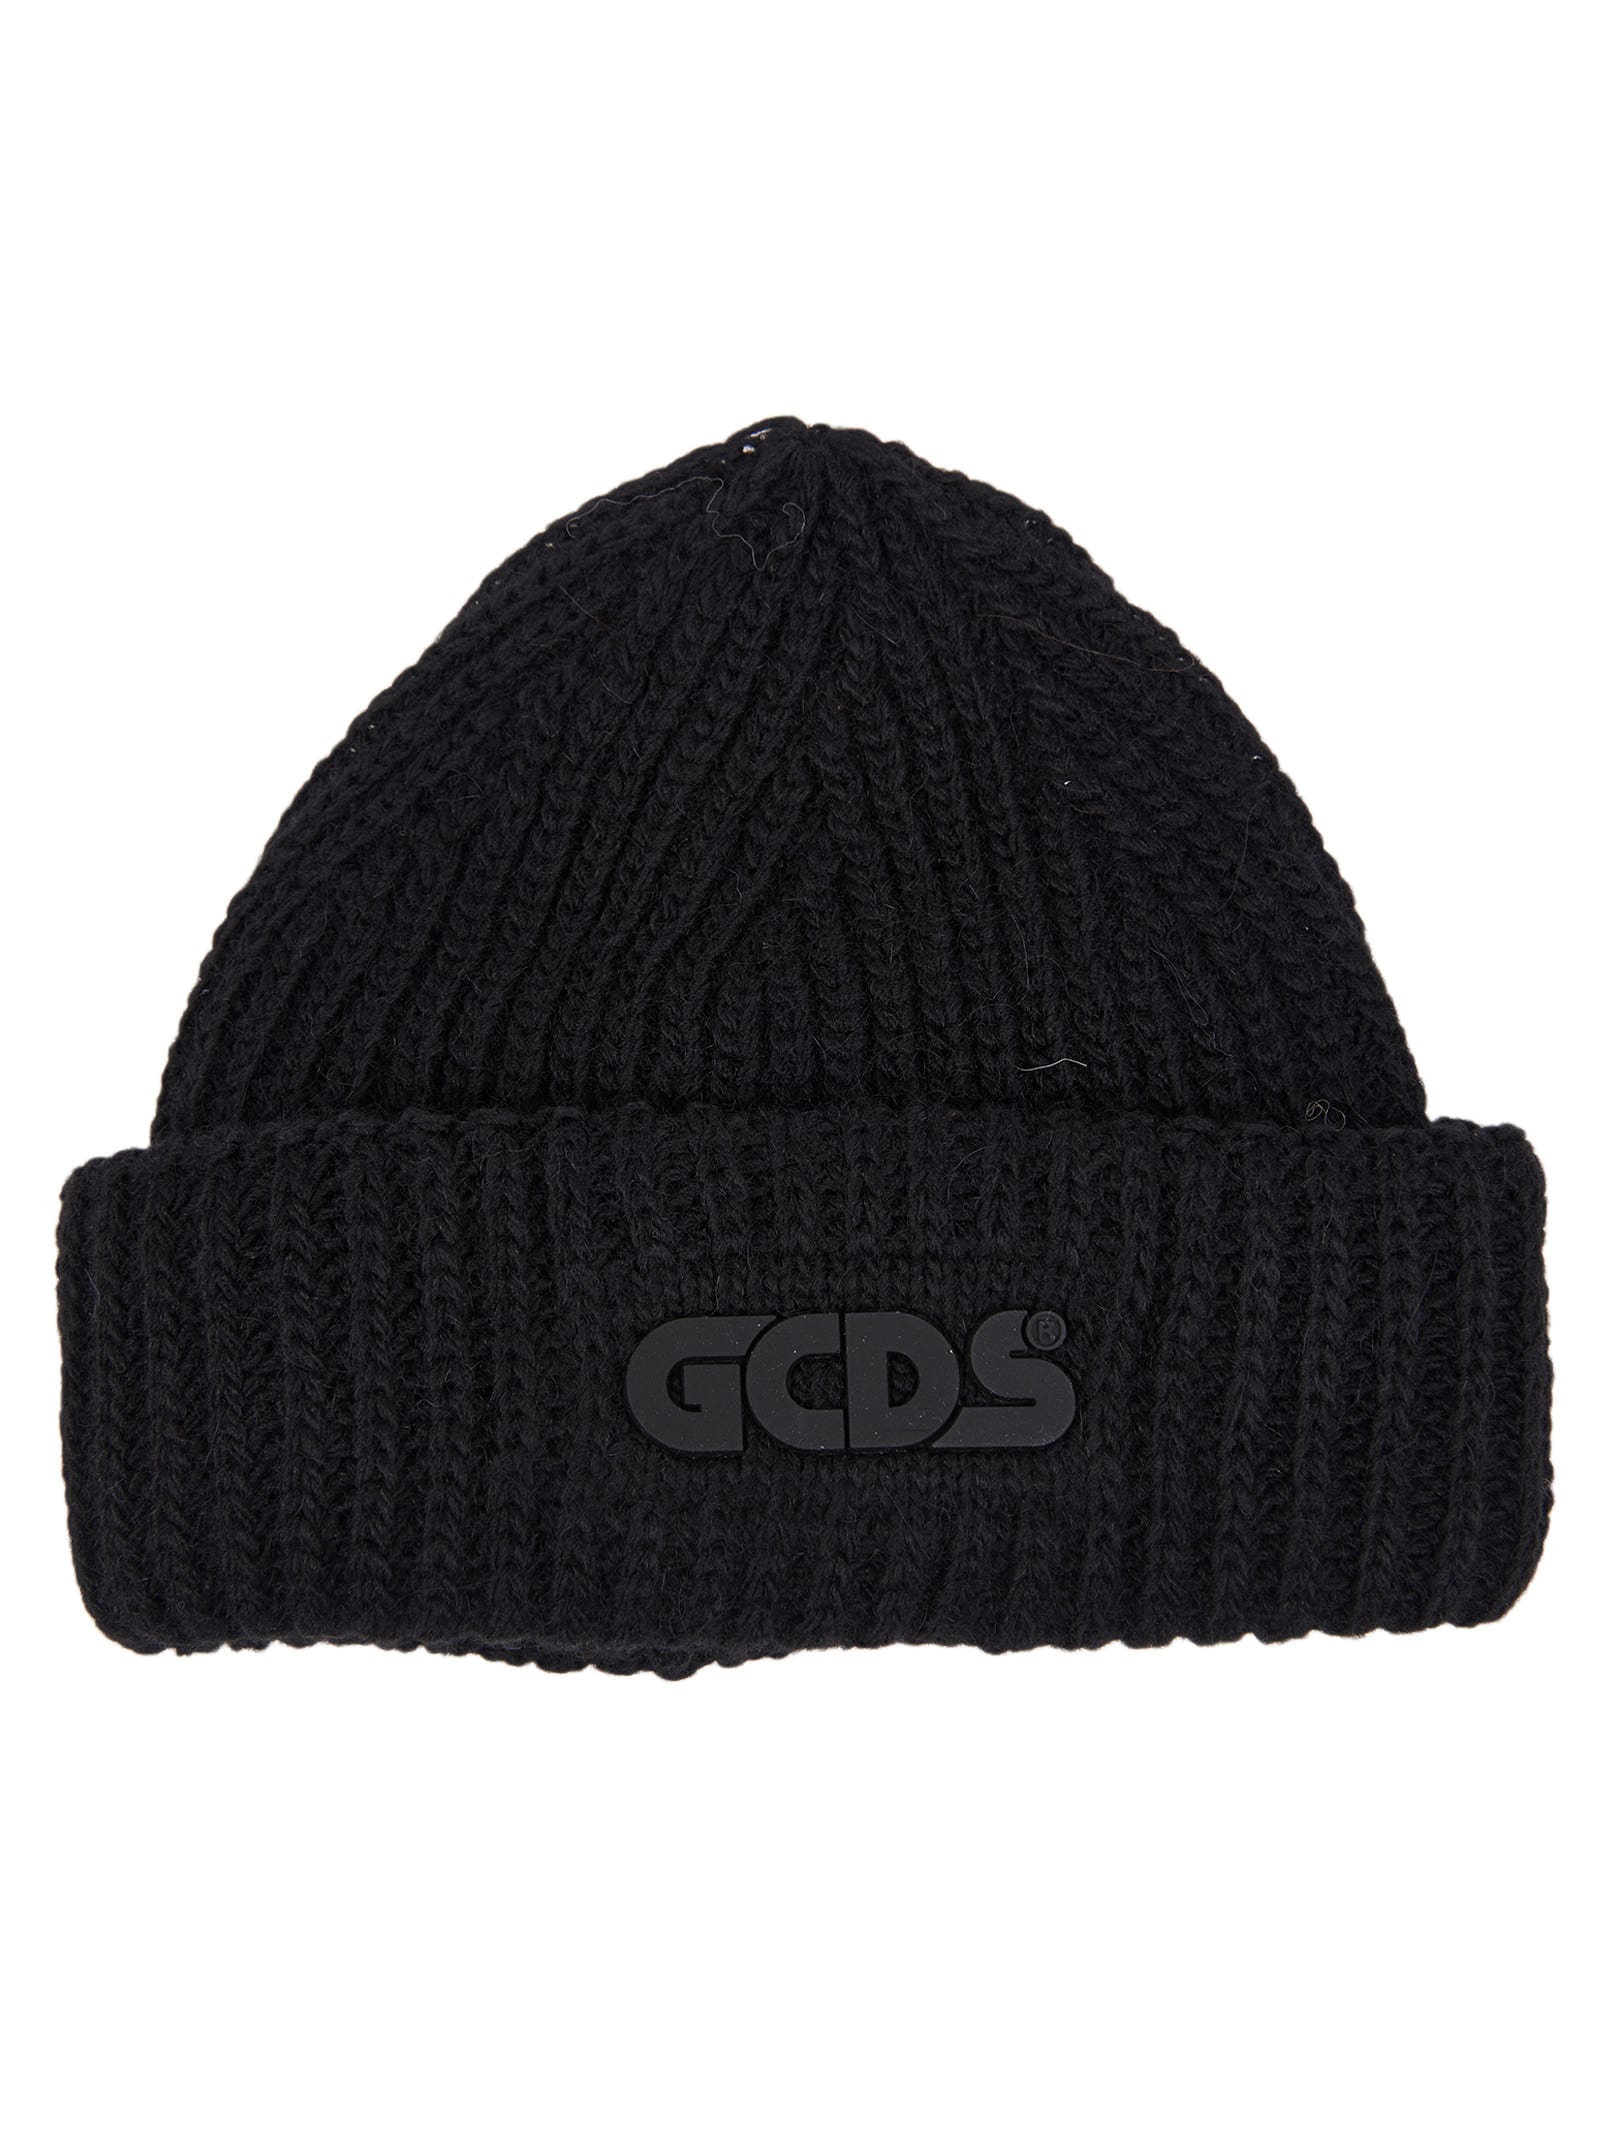 GCDS Black Hat With Logo